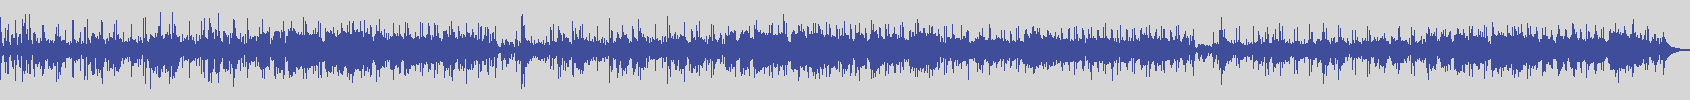 digiphonic_records [DPR013] Little Tony - Fais La Rire ( Riderà ) [Original Mix] audio wave form